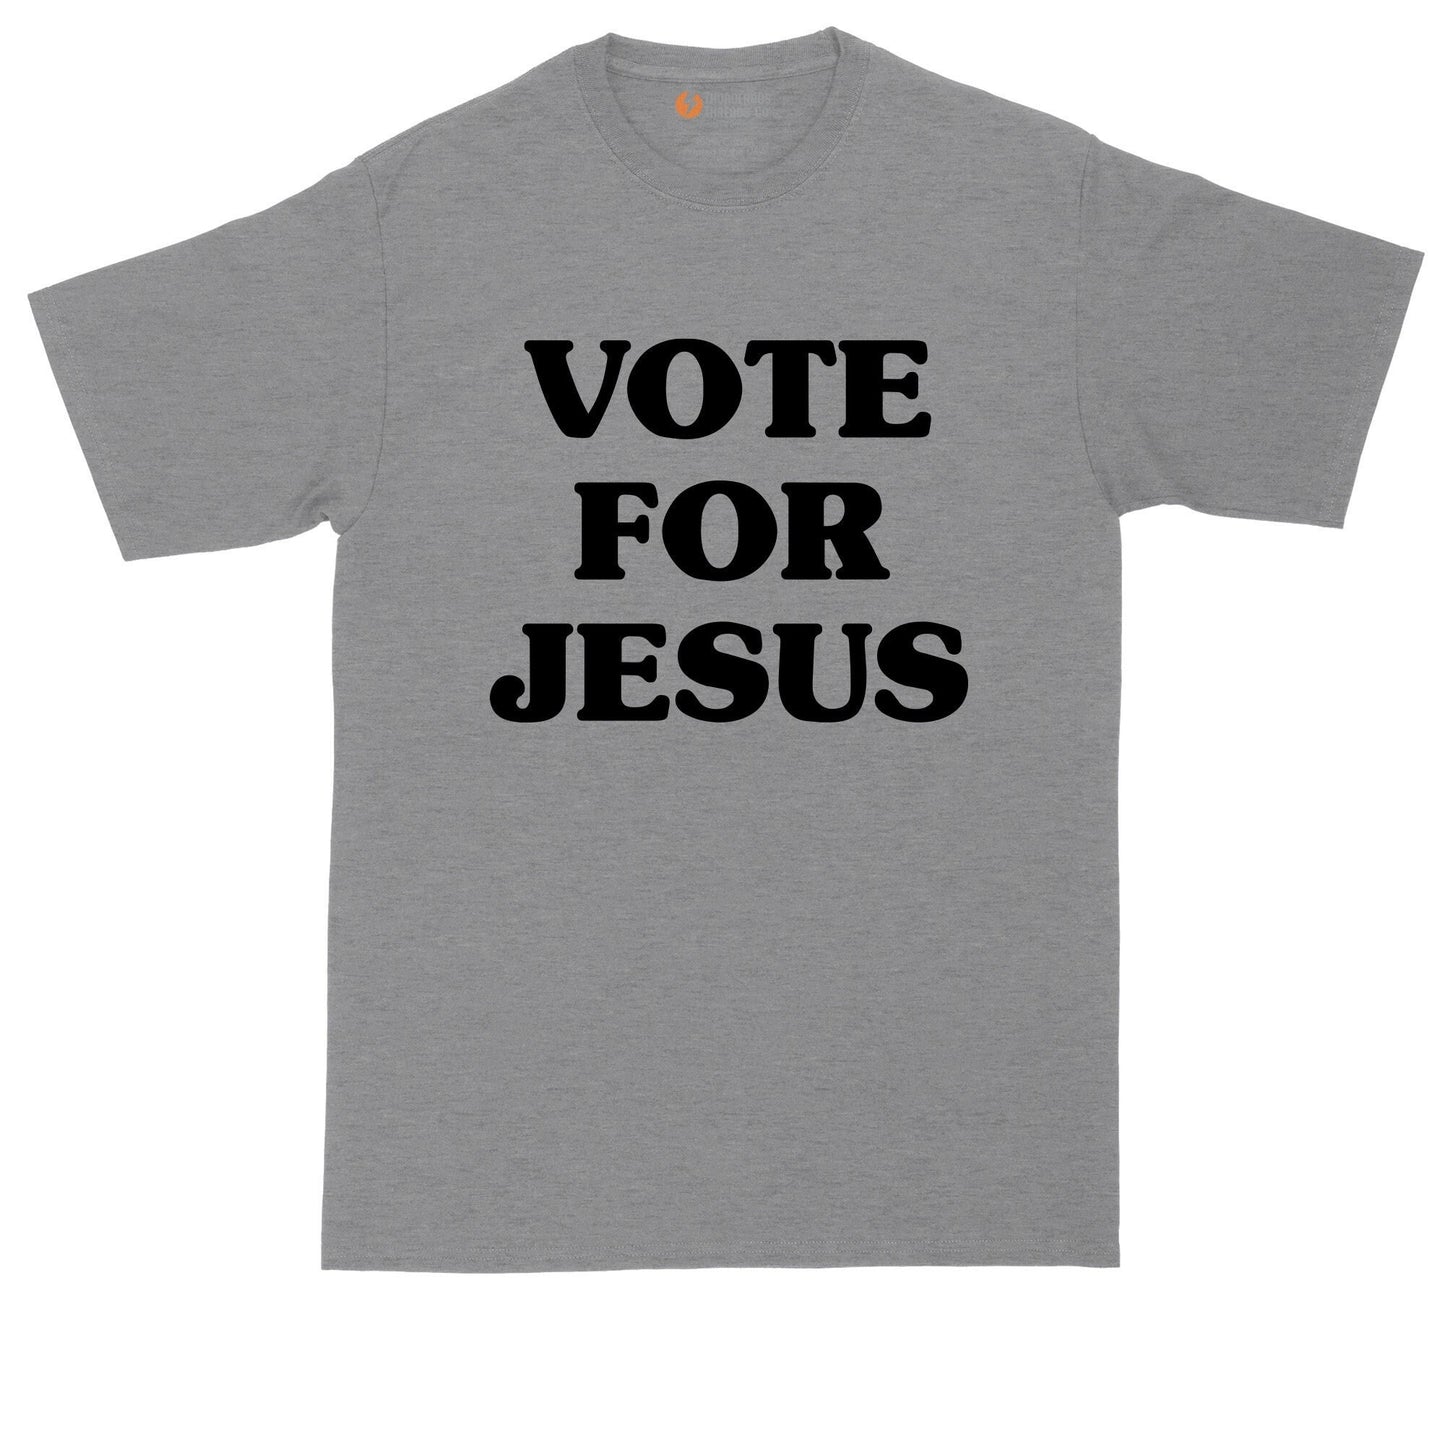 Vote for Jesus | Mens Big and Tall T-Shirt | Funny Christian T-Shirt | Prayer Shirt